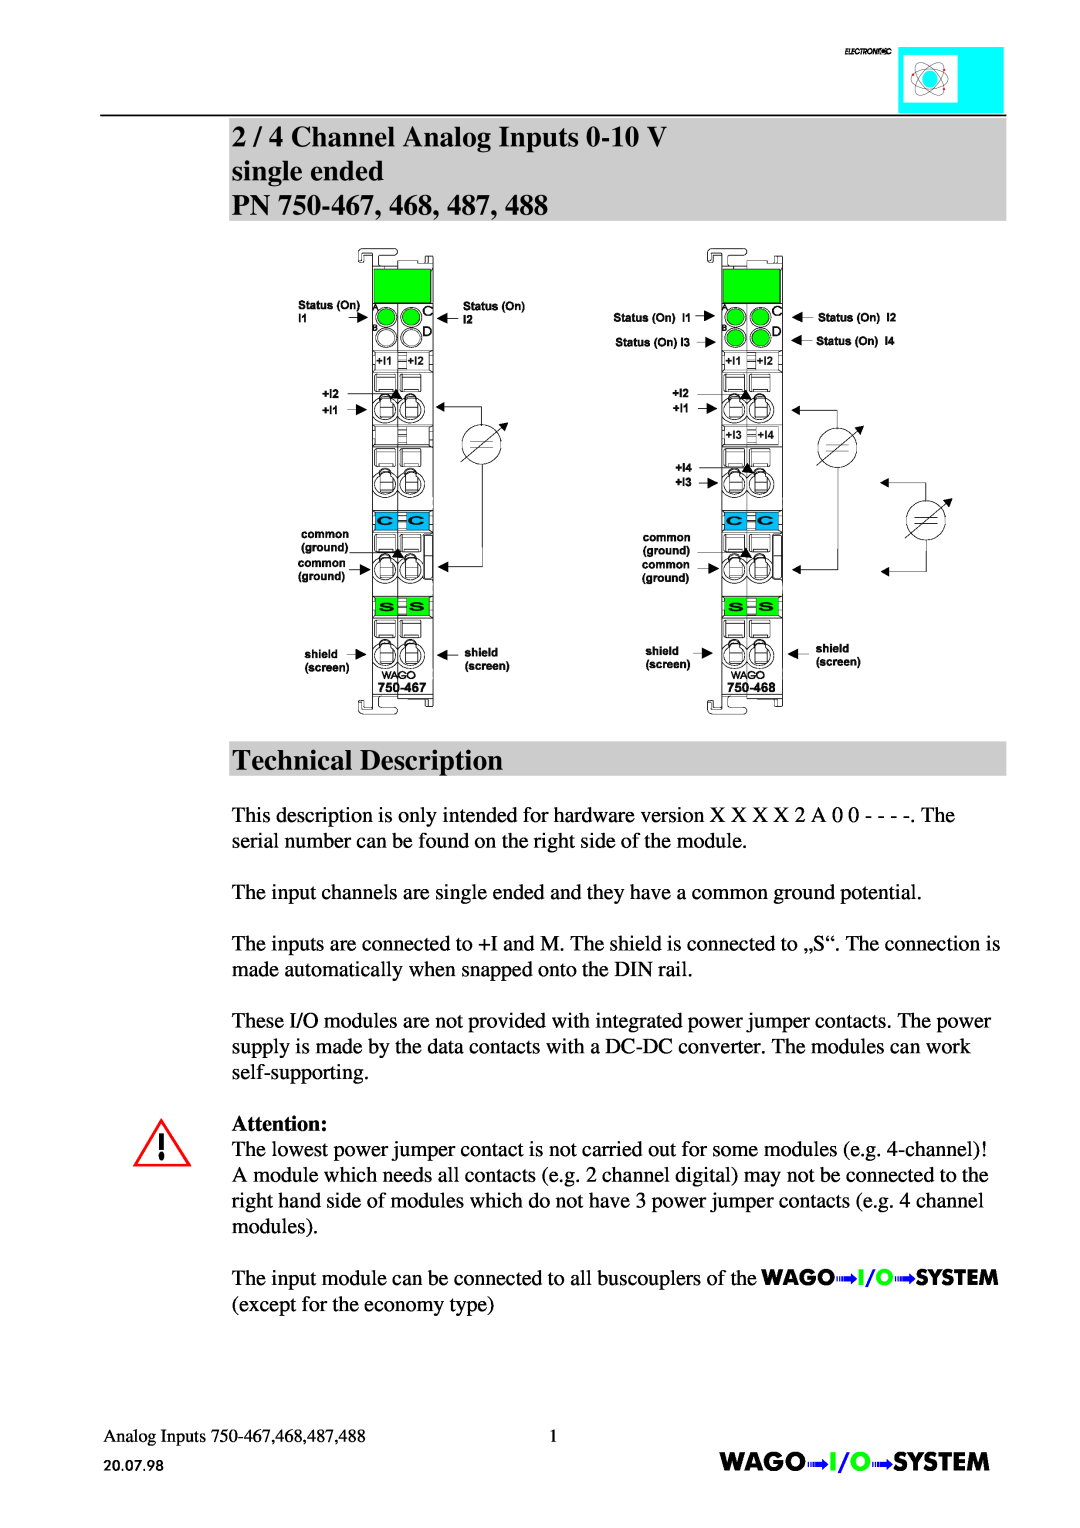 Quatech INTERBUS S manual 2 / 4 Channel Analog Inputs 0-10 V single ended PN 750-467, 468, 487, Technical Description 